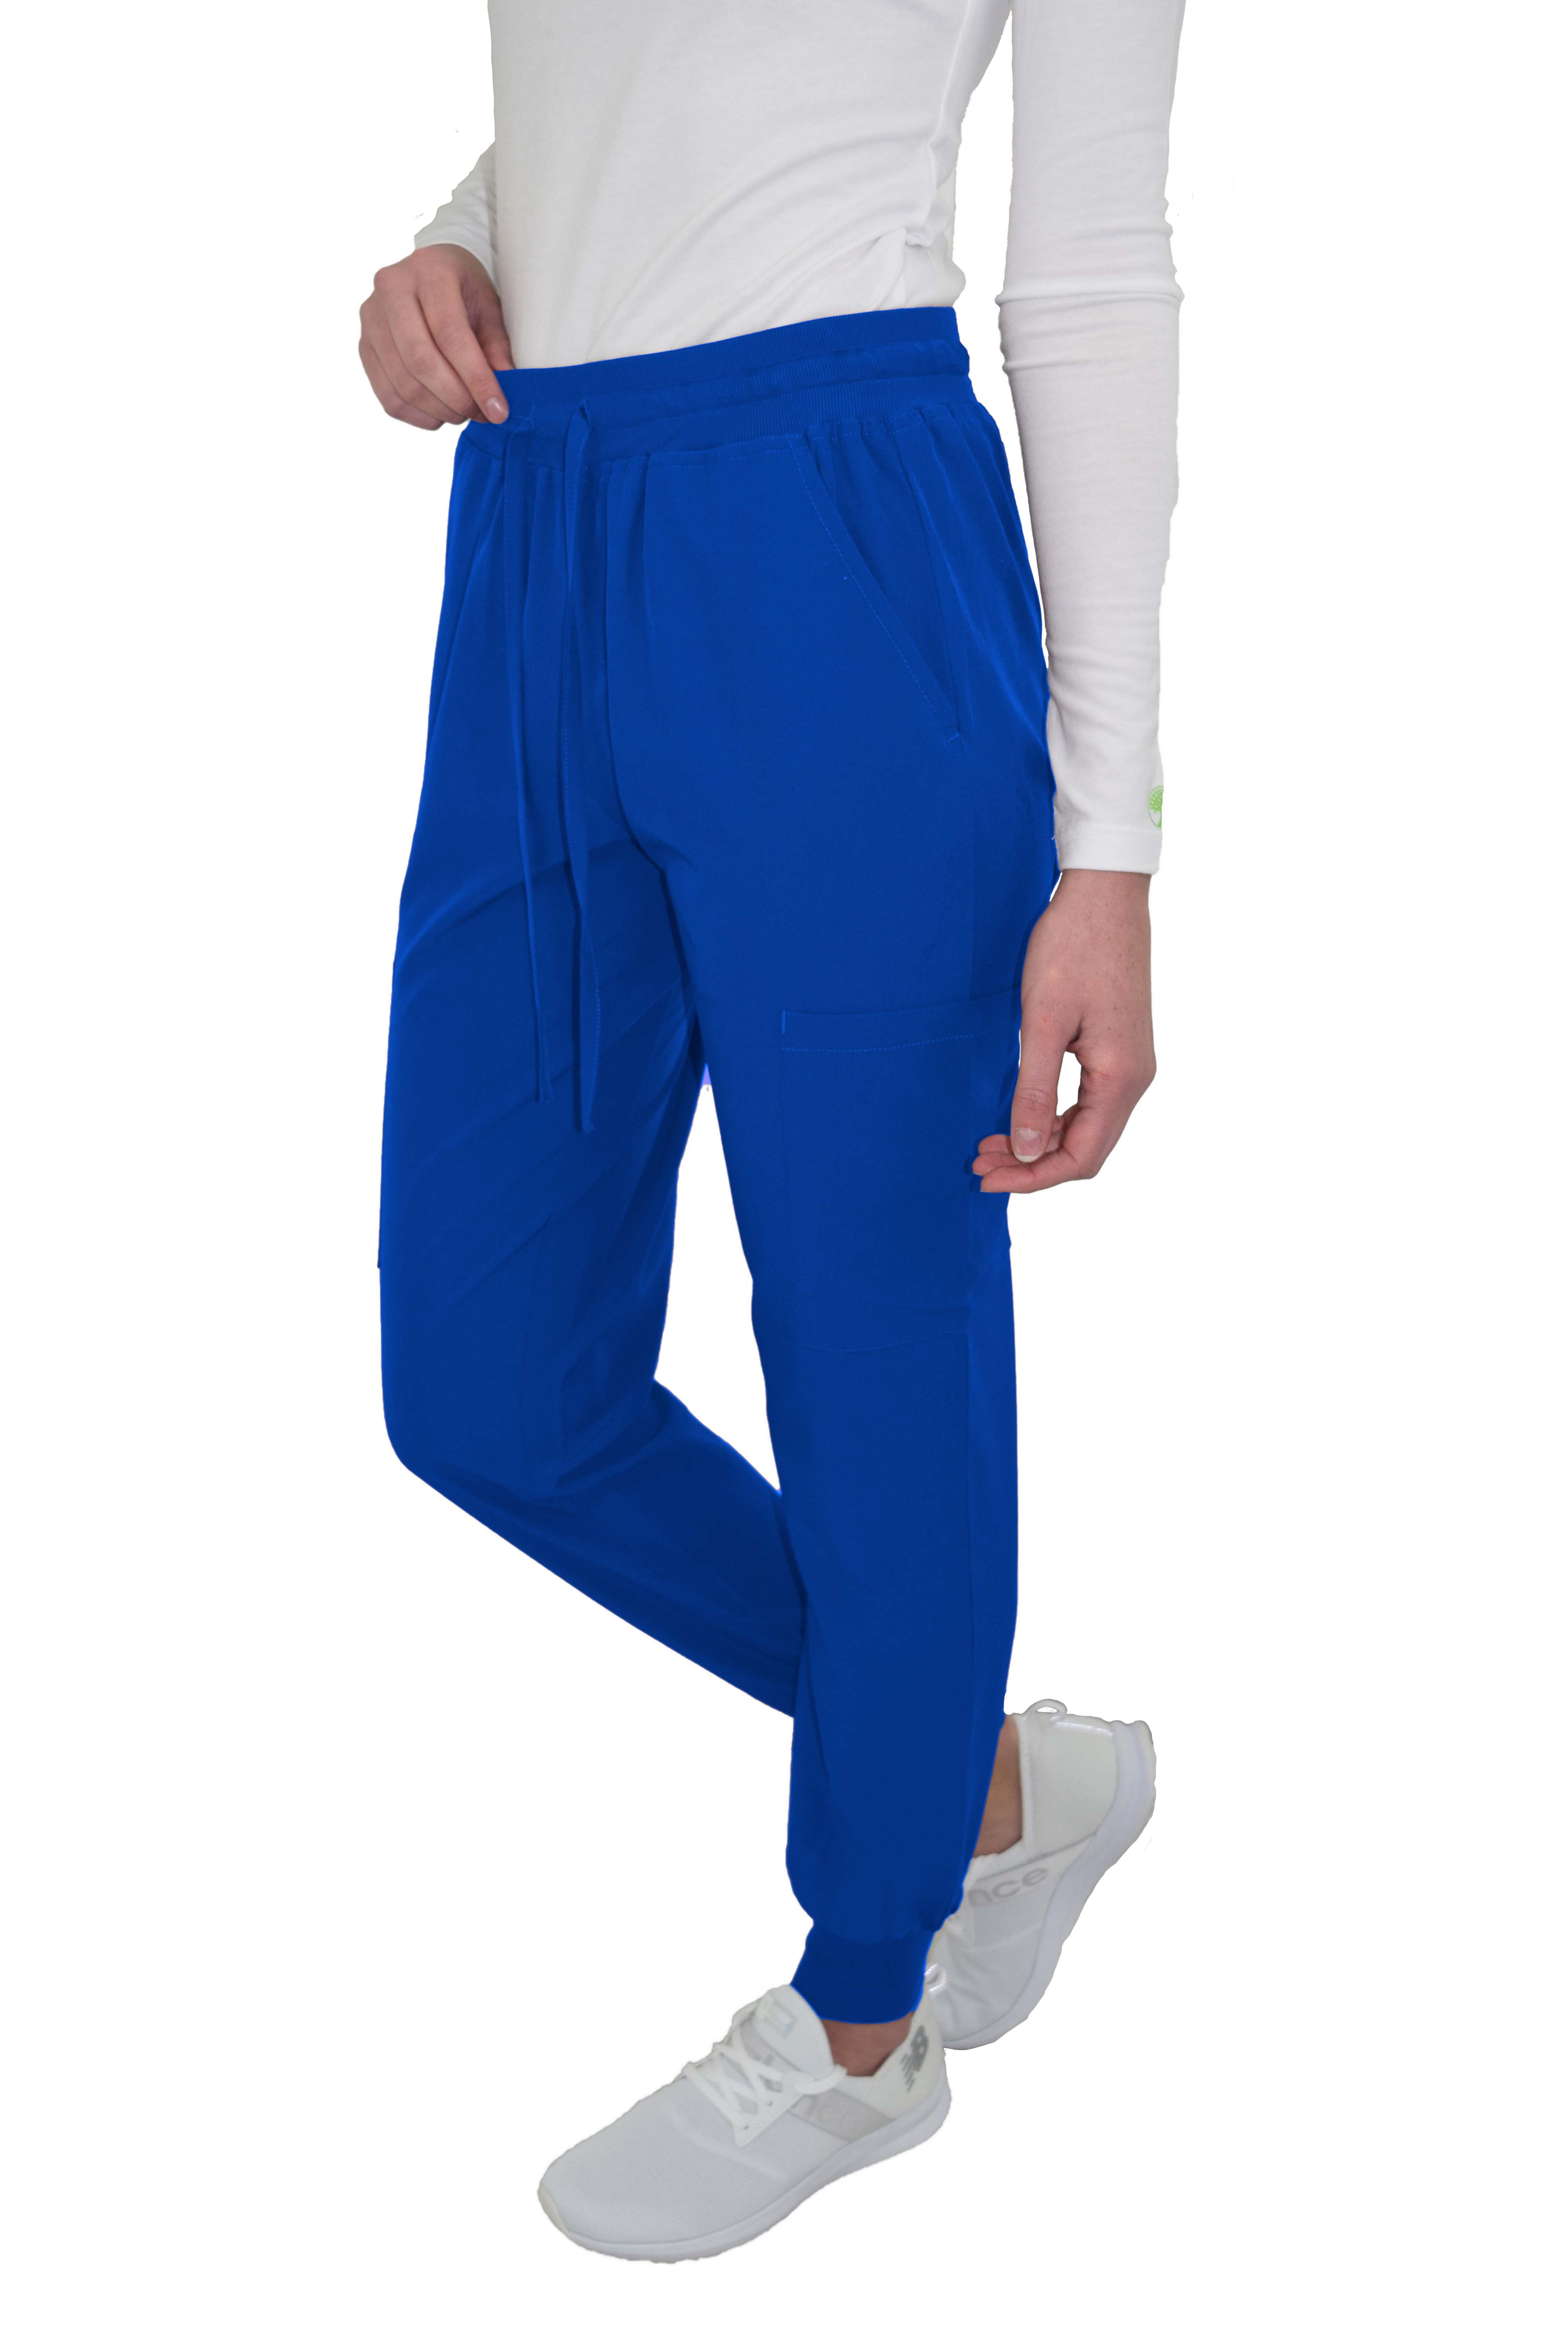 Women's Medical Nursing Jogger Slim Fit Scrub Pant GT Performance-Royal  Blue/Electric Blue-Large